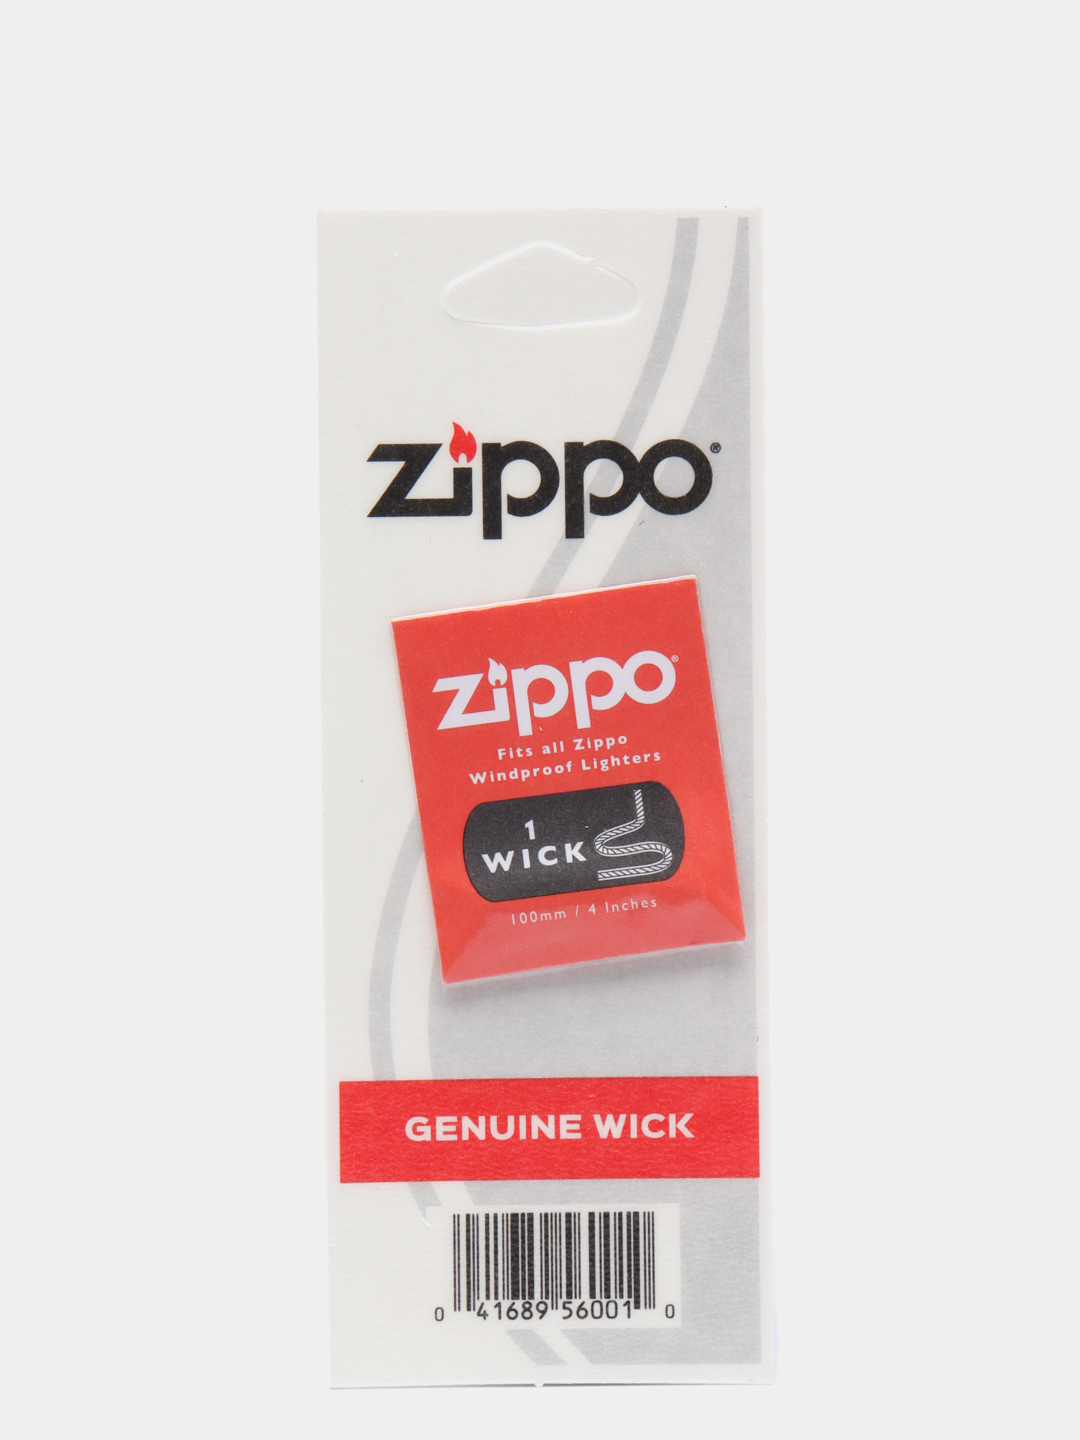  Zippo в блистере, фитиль для бензиновых зажигалок Зиппо за 271 .